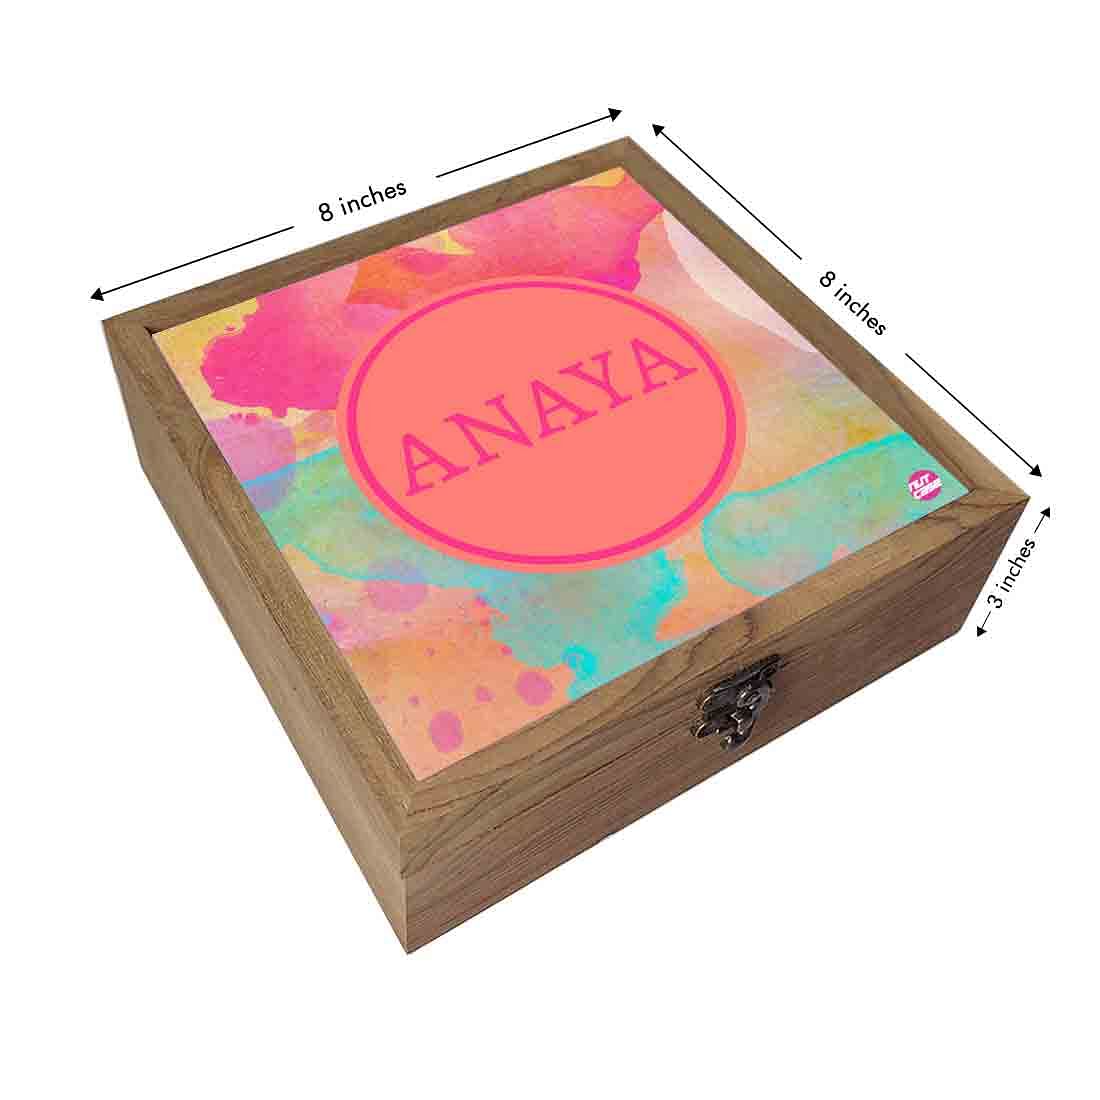 Personalized Jewellery Storage Box for Women - Multi Watercolor Nutcase